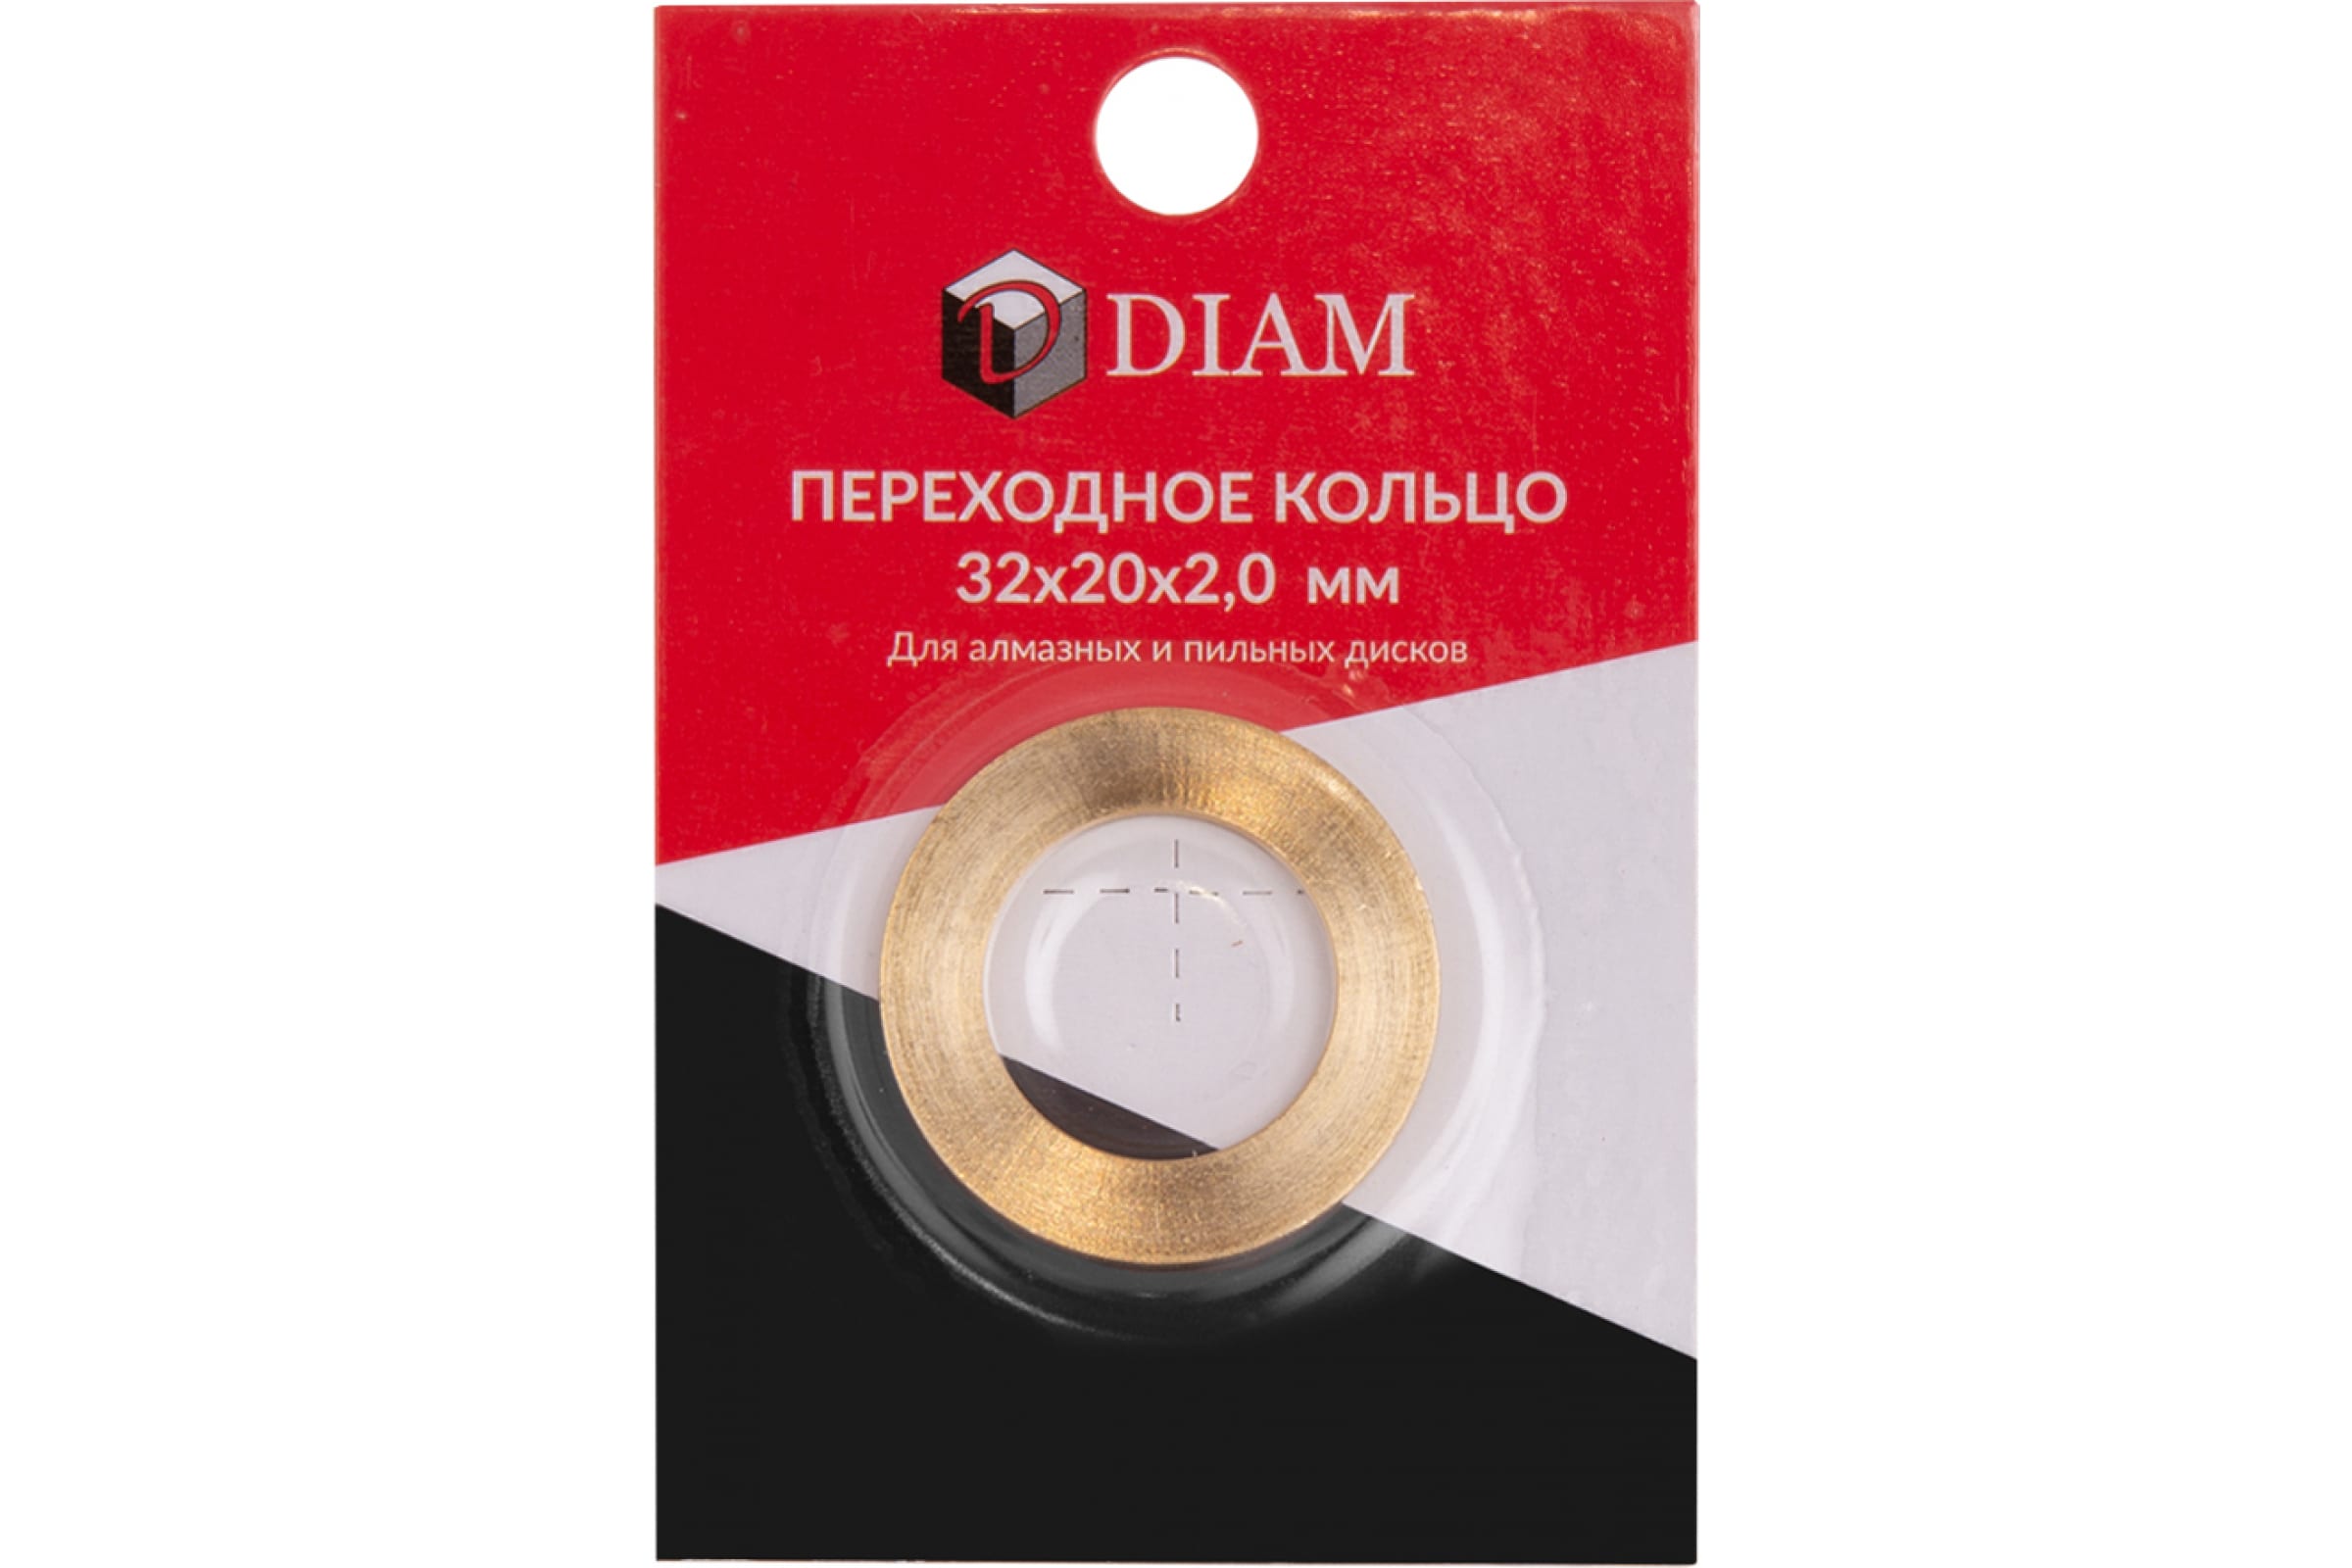 DIAM Переходное кольцо 32х20х2,0 640085 переходное кольцо trio diamond